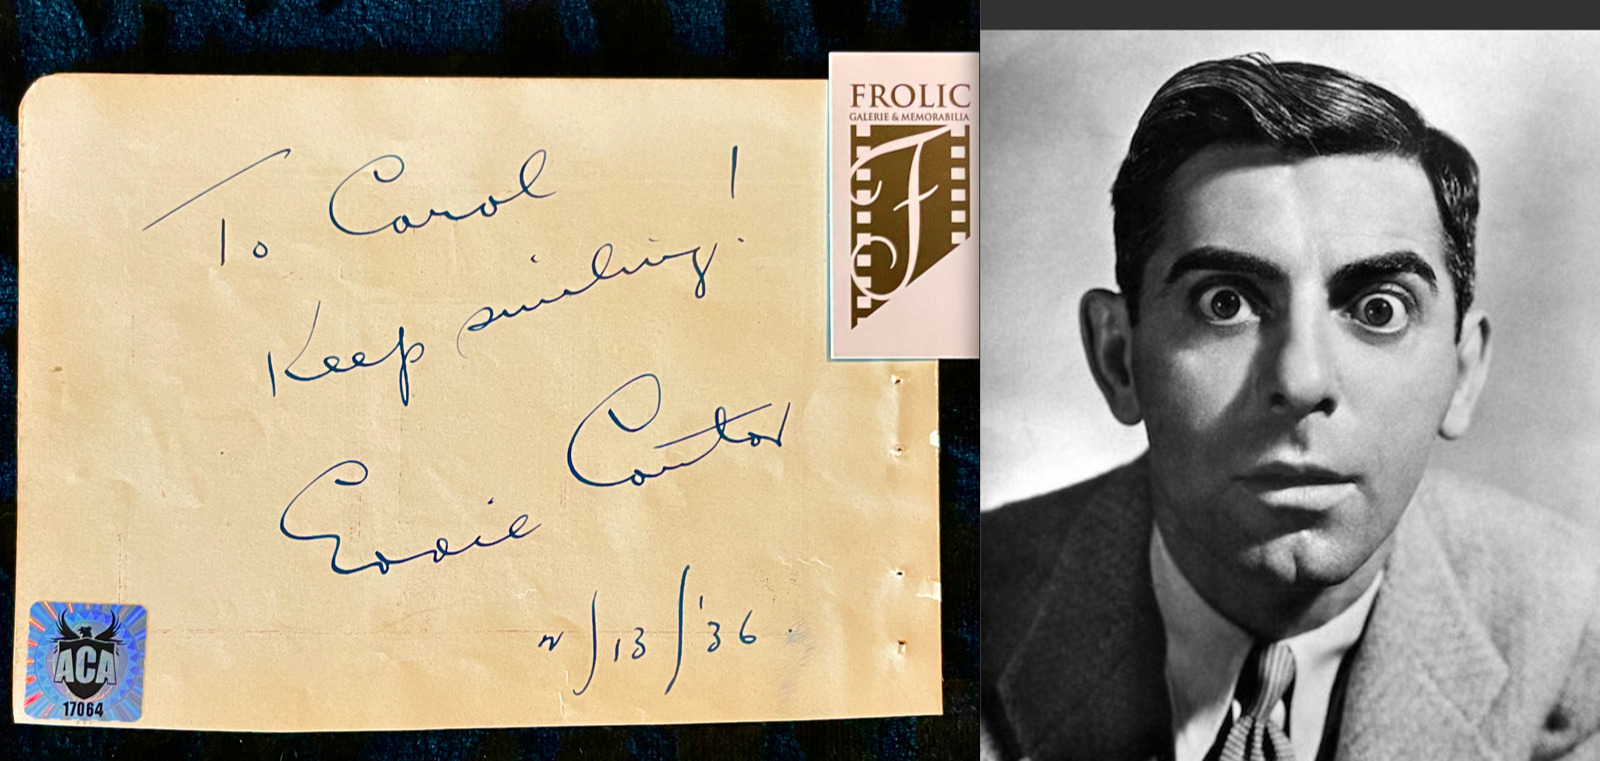 EDDIE CANTOR Signed 1936 Original album page ACA (LOA) Early American Comedian